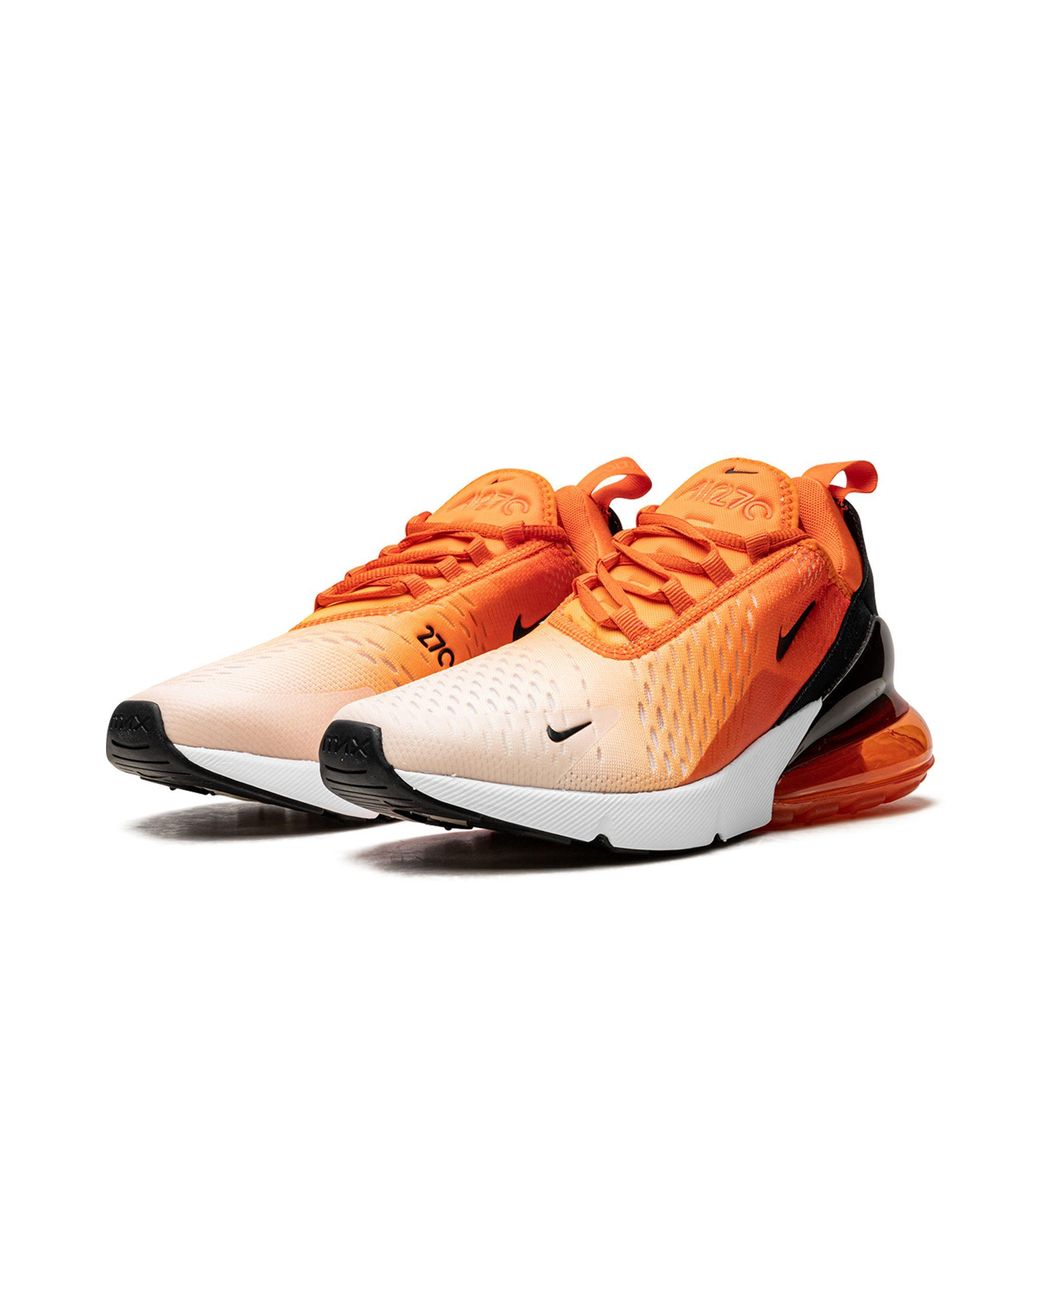 Nike Air Max 270 "orange Juice" Shoes in Black UK